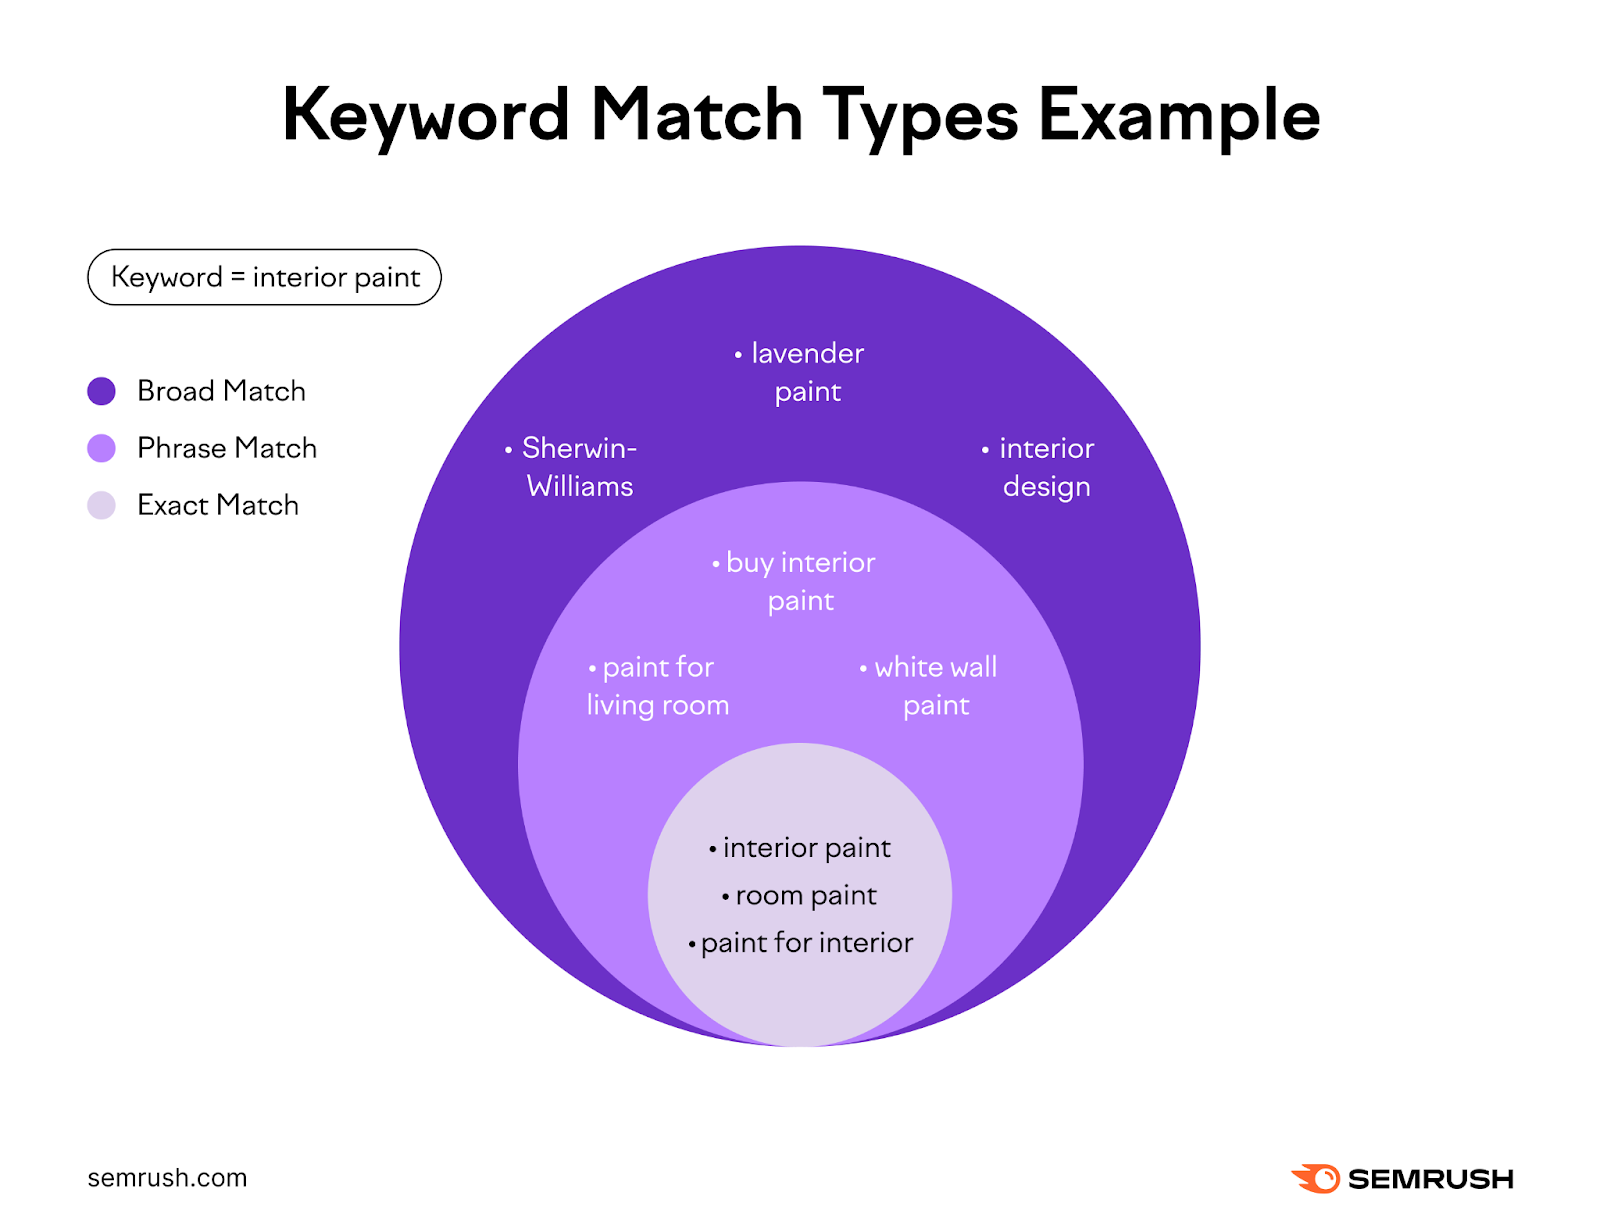 Keyword match types example